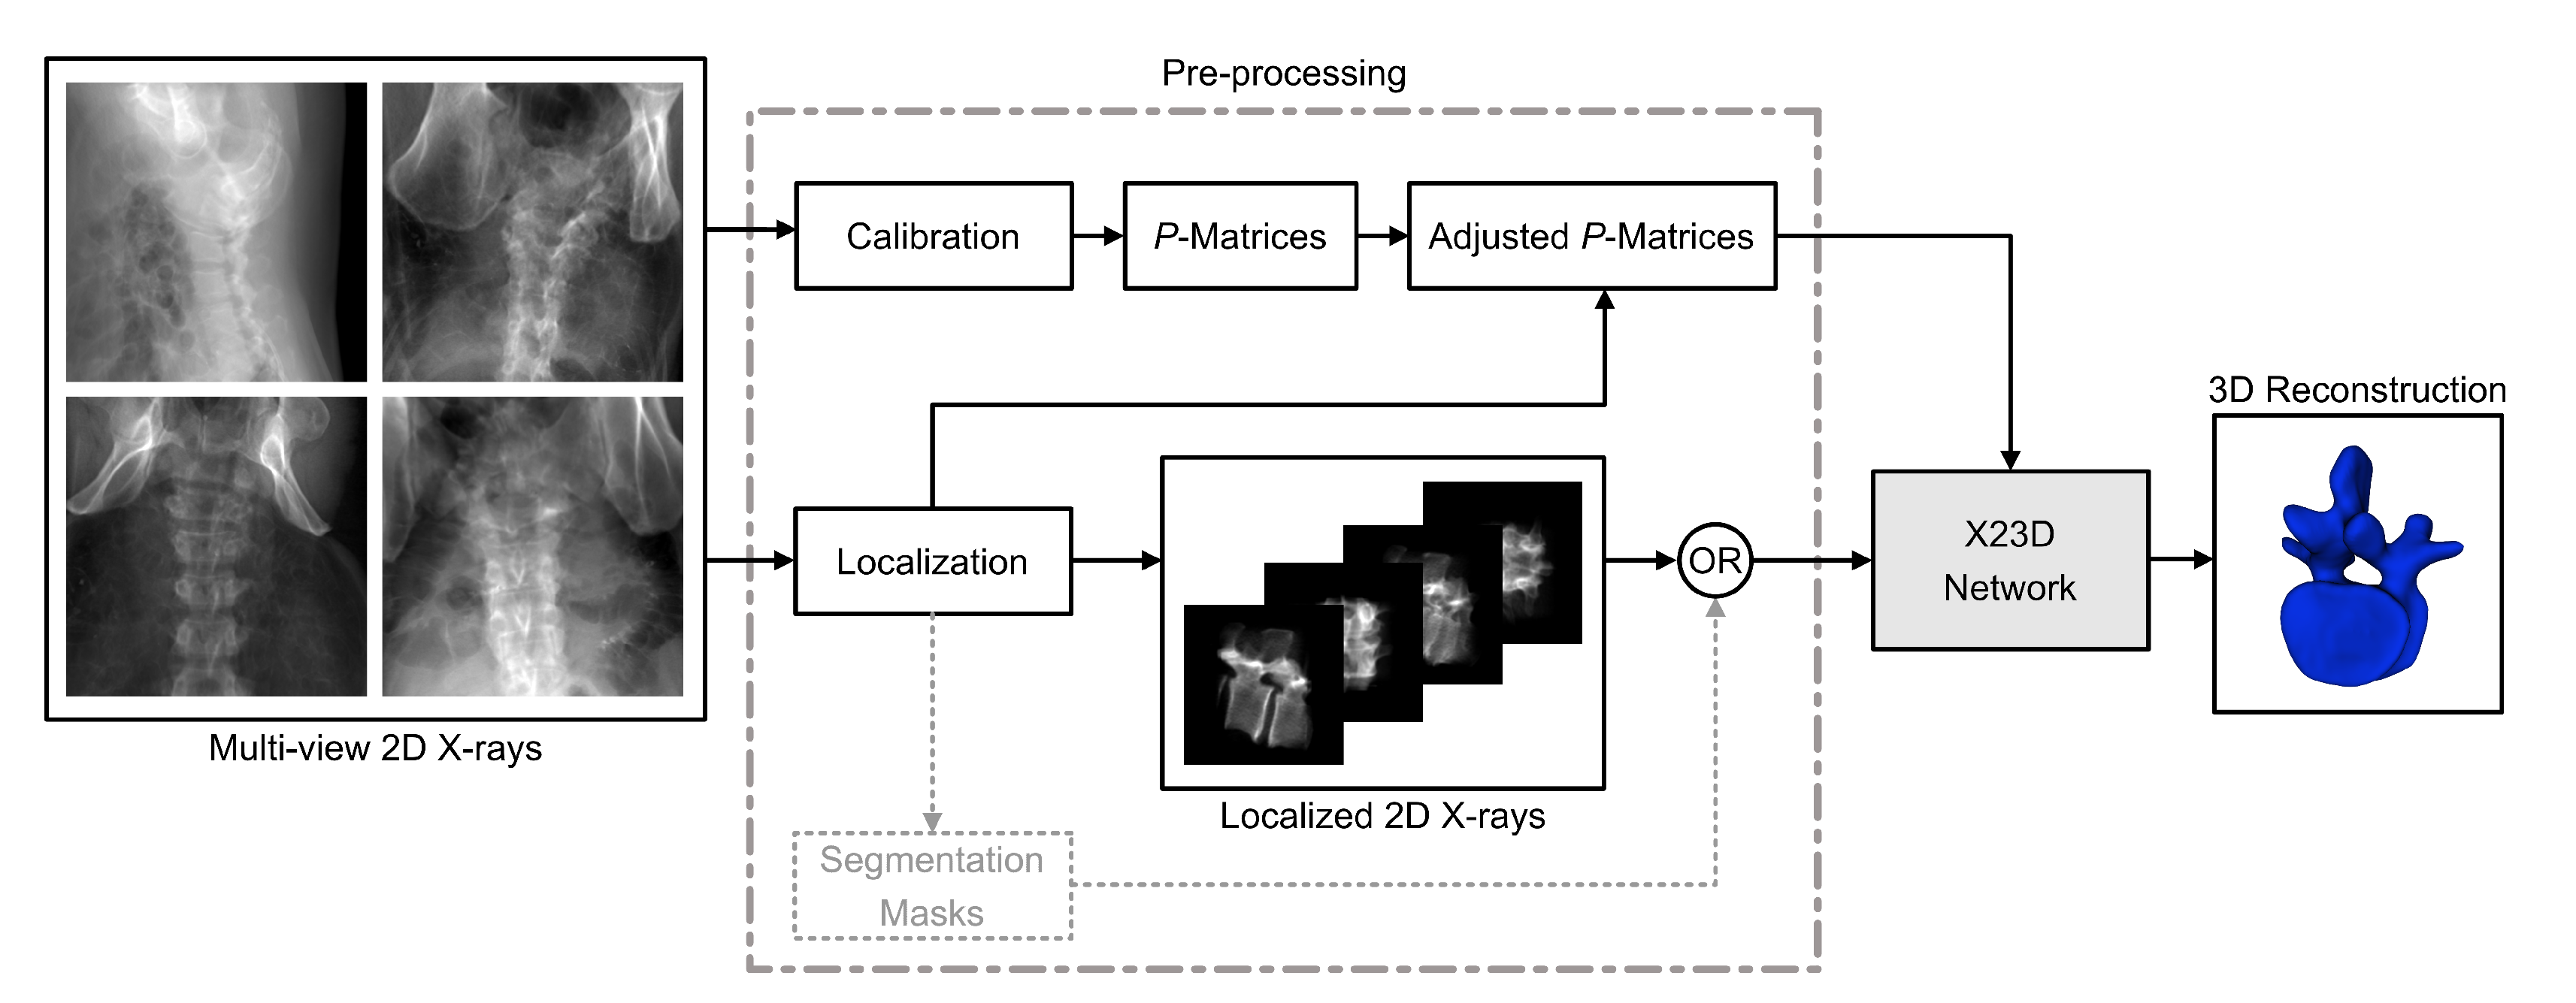 J. Imaging | Free Full-Text | X23D—Intraoperative 3D Lumbar ...